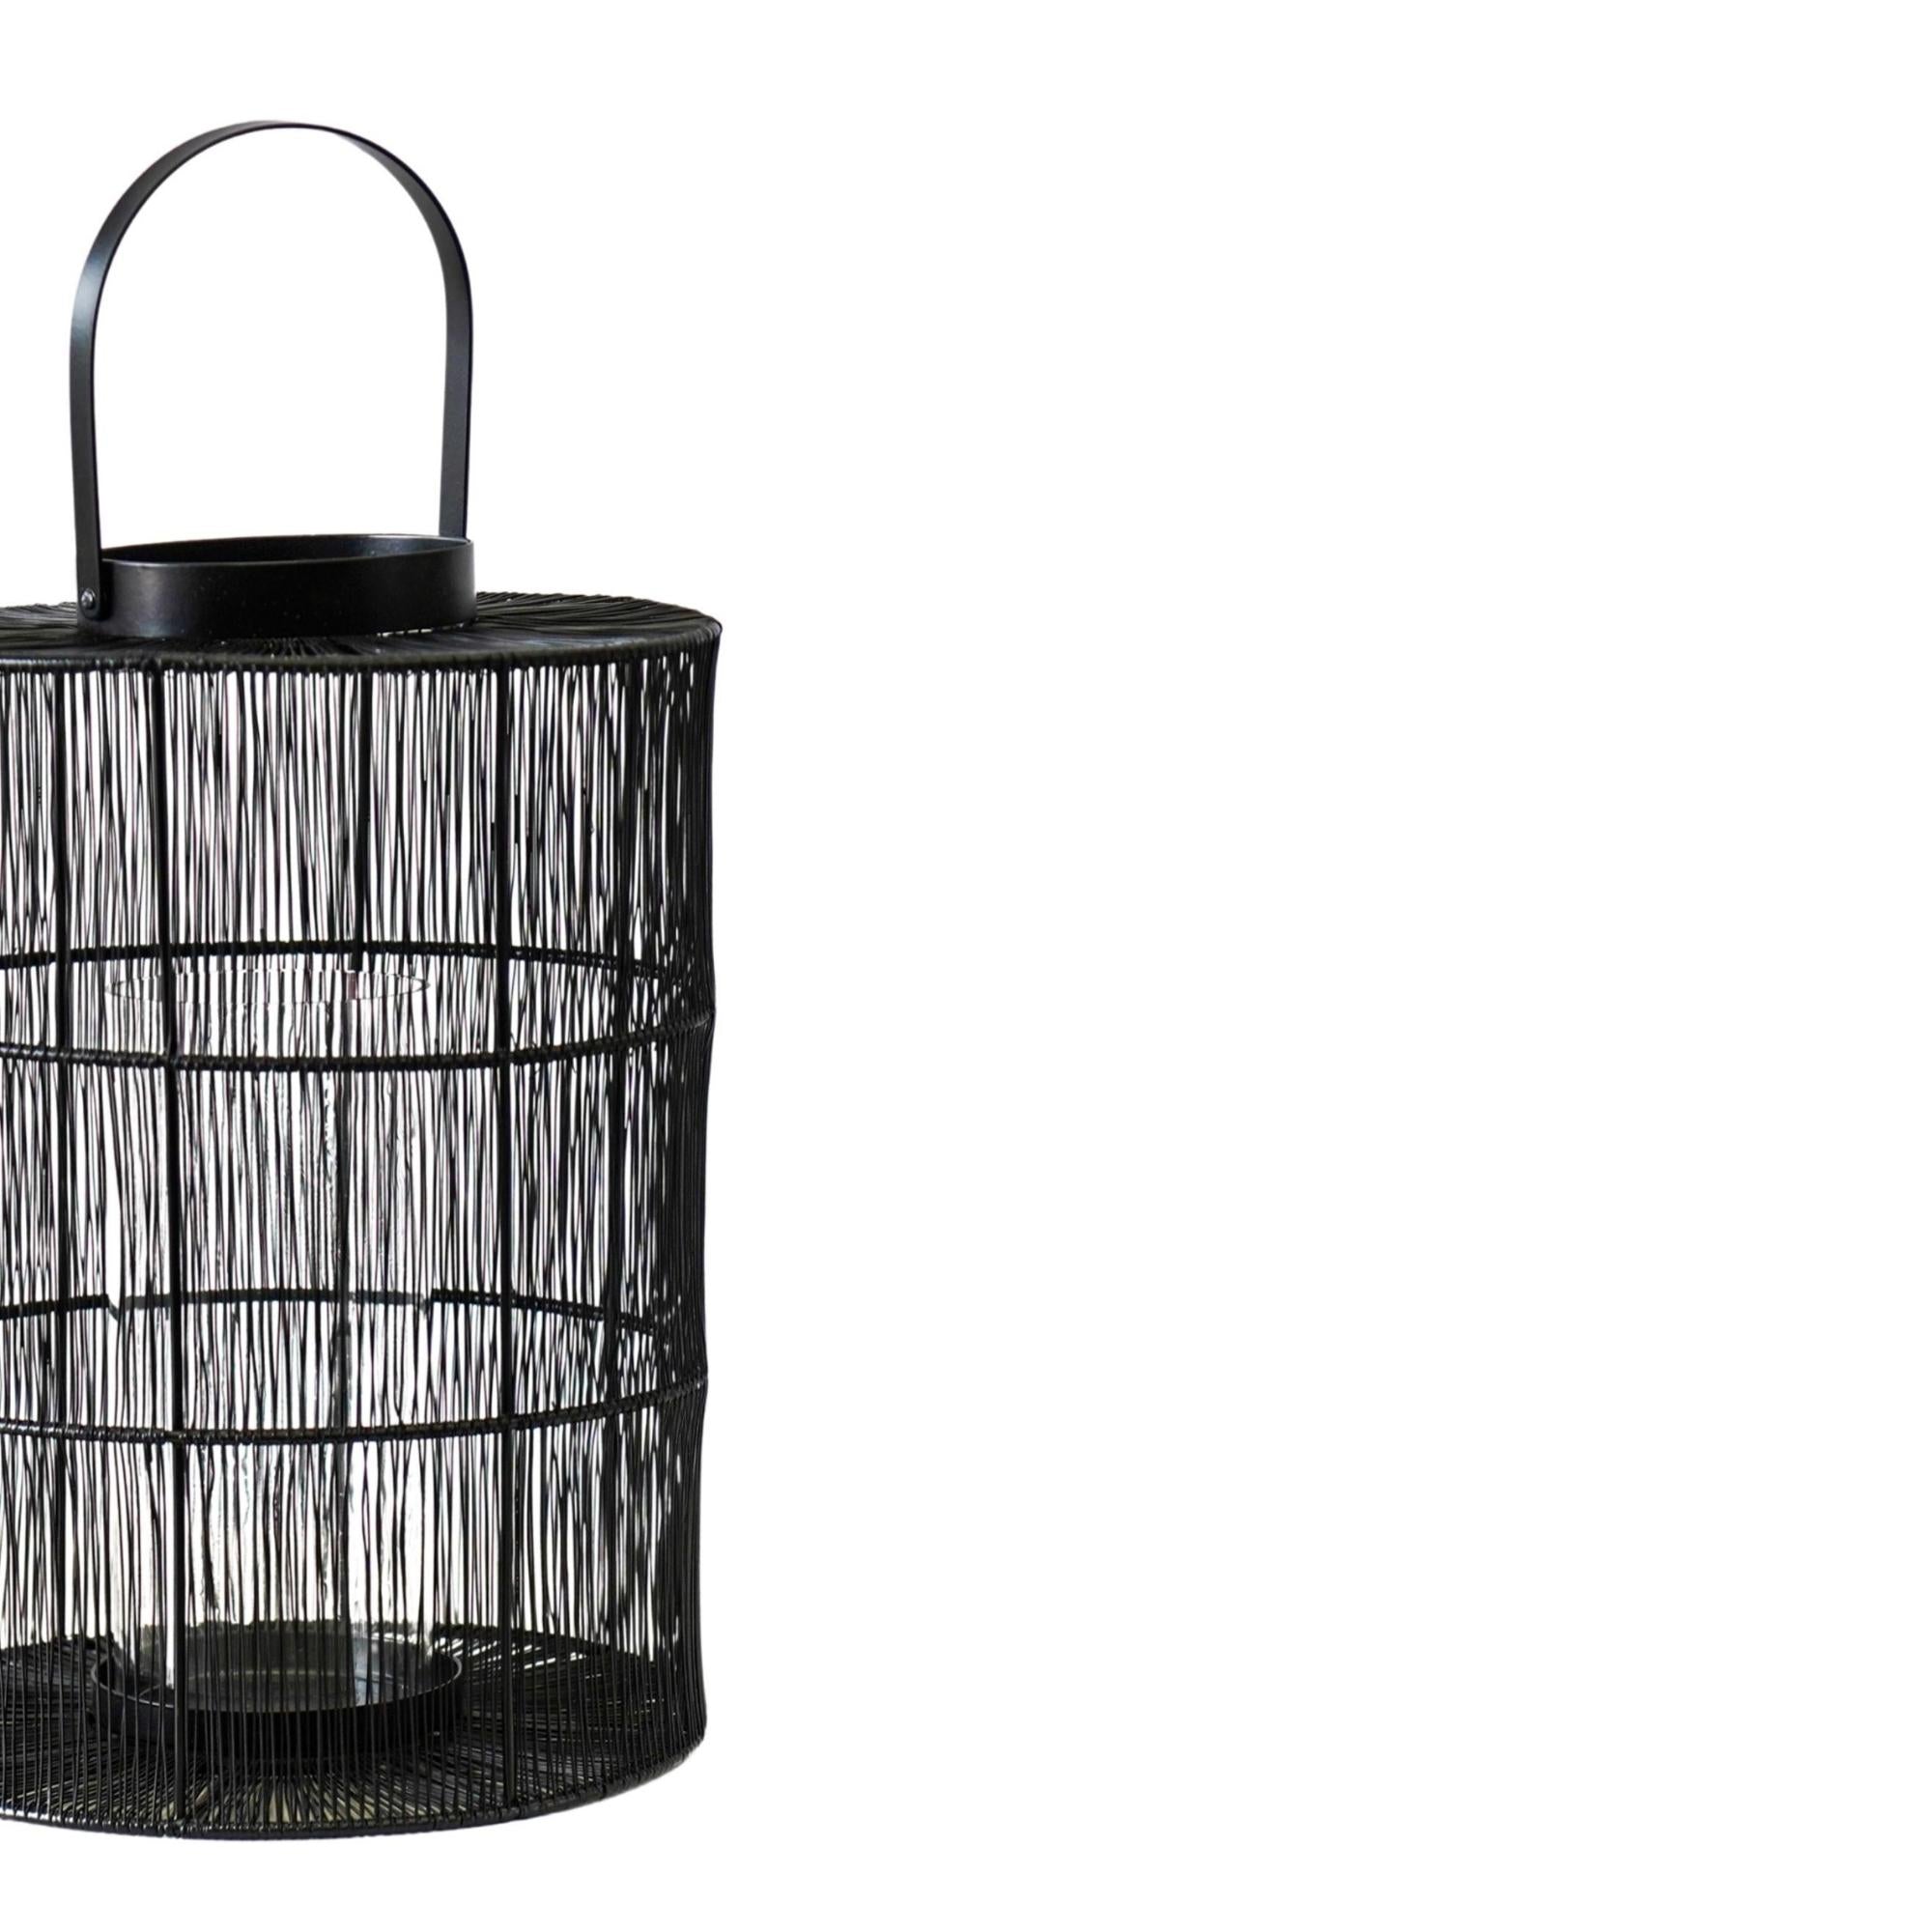 PortofIno Wirework Lantern With Glass Insert Black Large